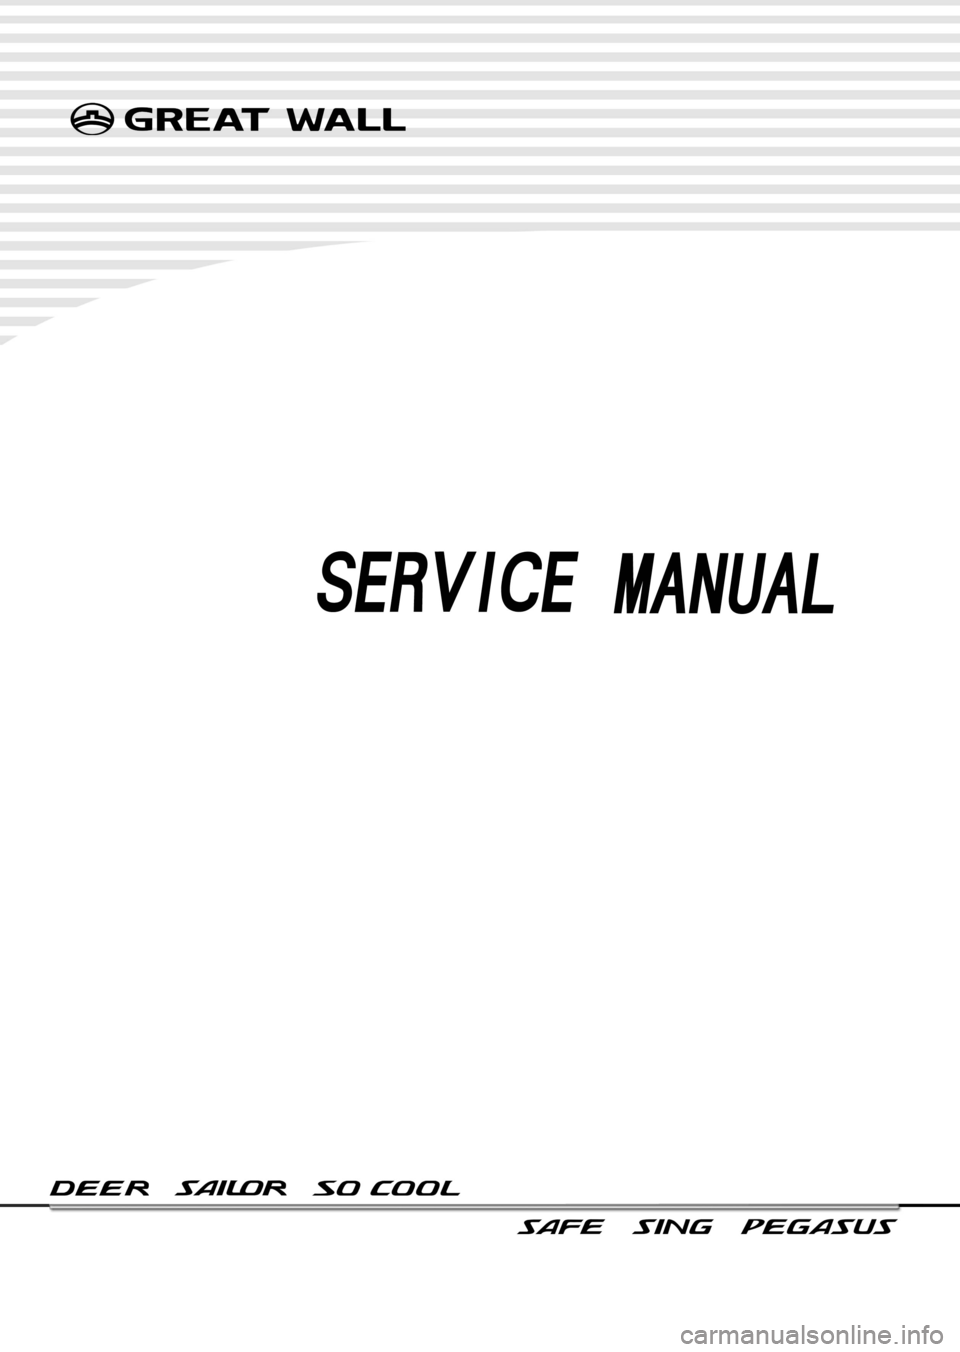 GREAT WALL DEER 2006  Service Manual 